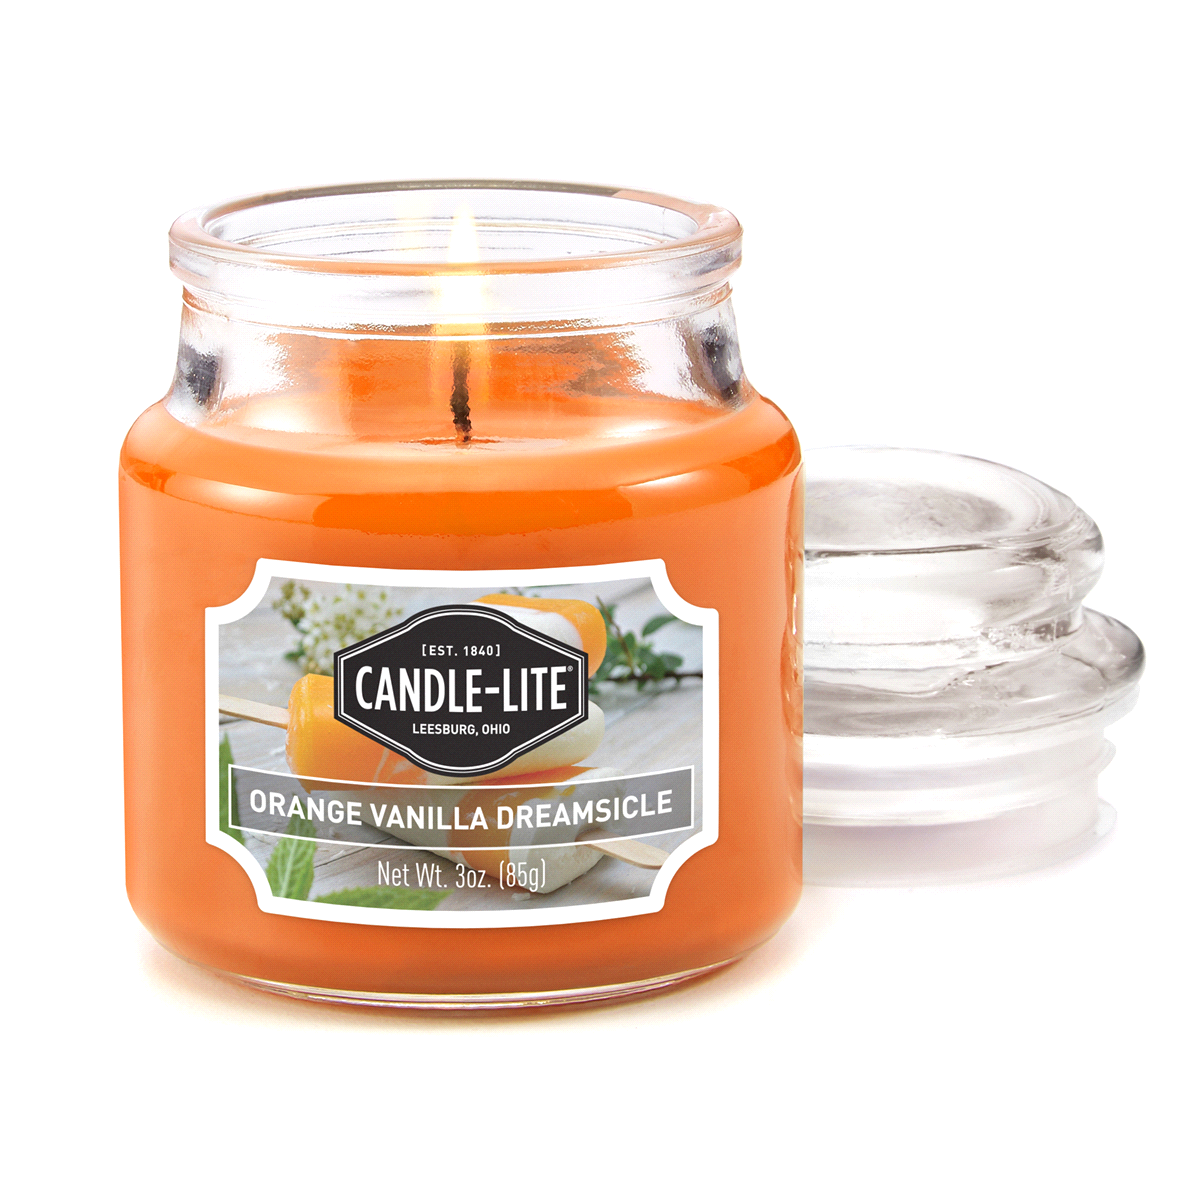 Candle-lite Orange Vanilla Dreamsicle Jar Candle - ScentGiant